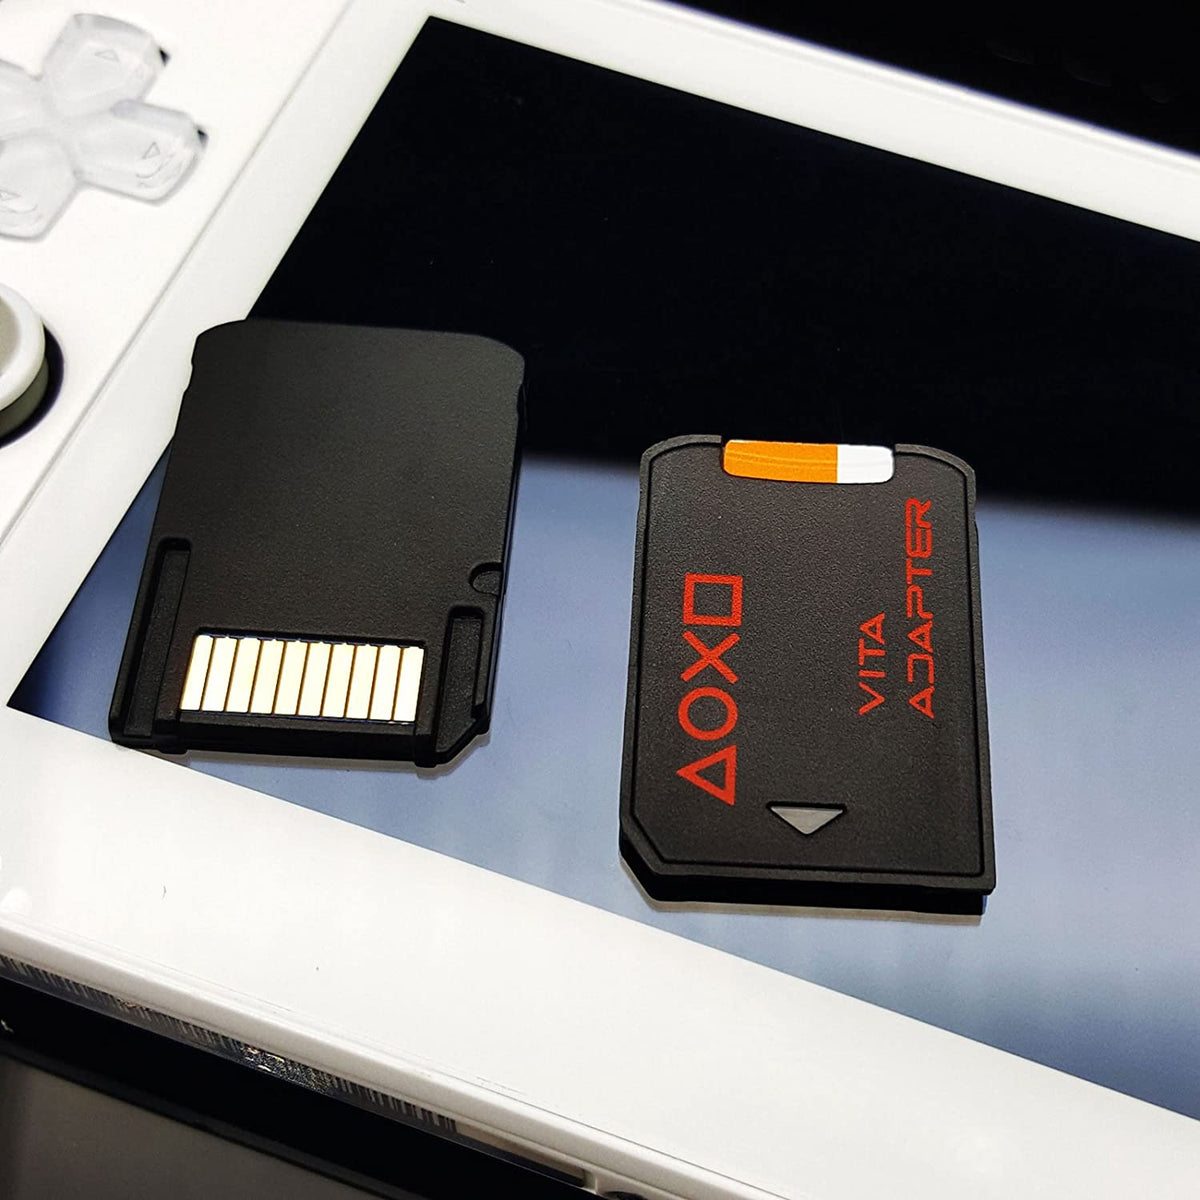 PS Vita 【 変換メモリーカード１枚 】microSDカードをVitaの 